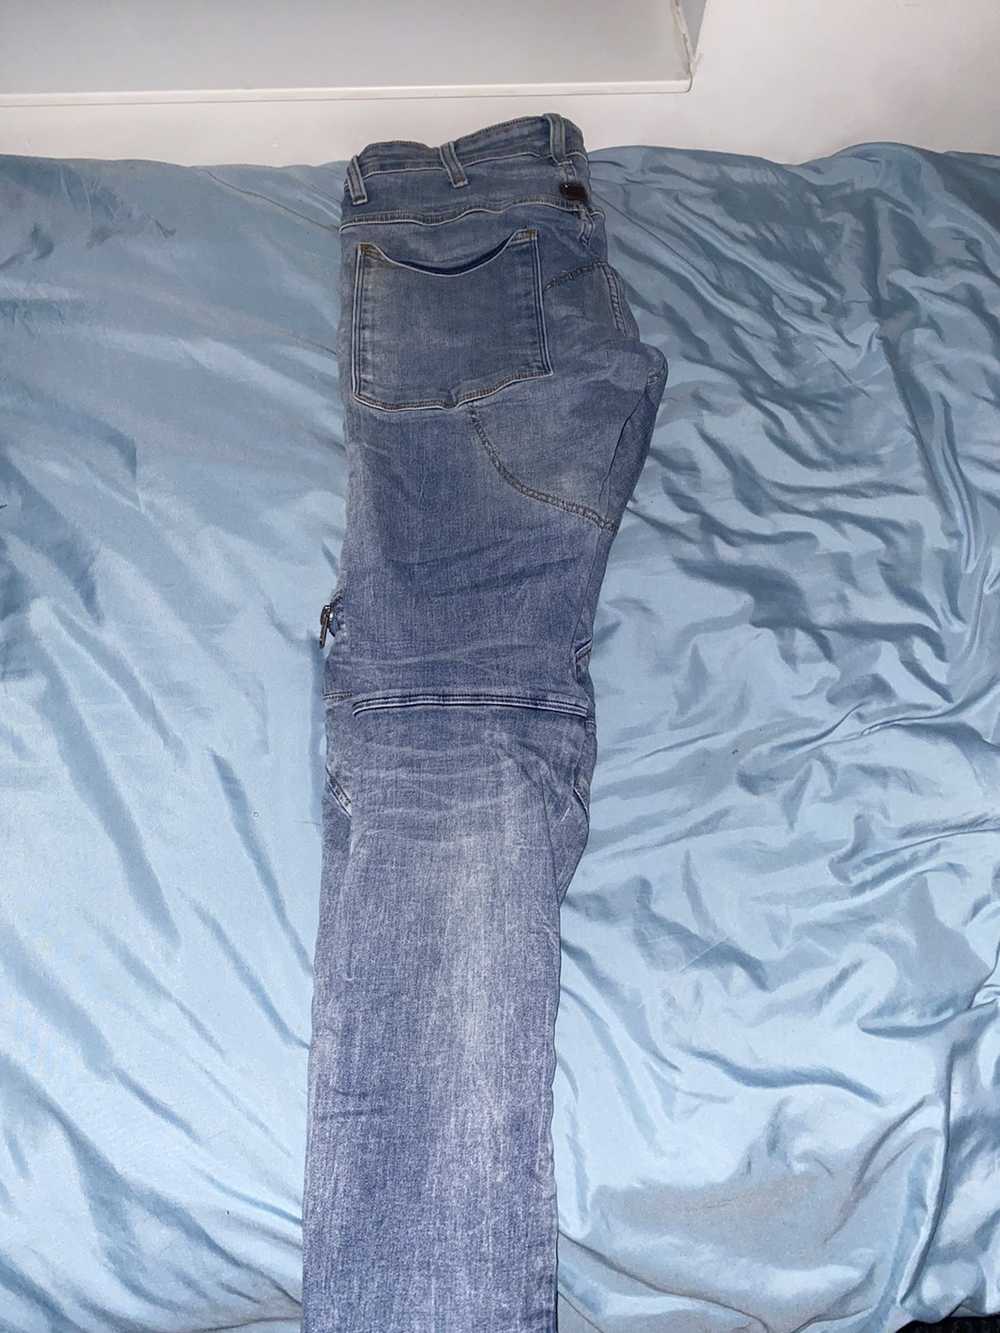 Gstar G Star Slim Fit Jeans - image 4